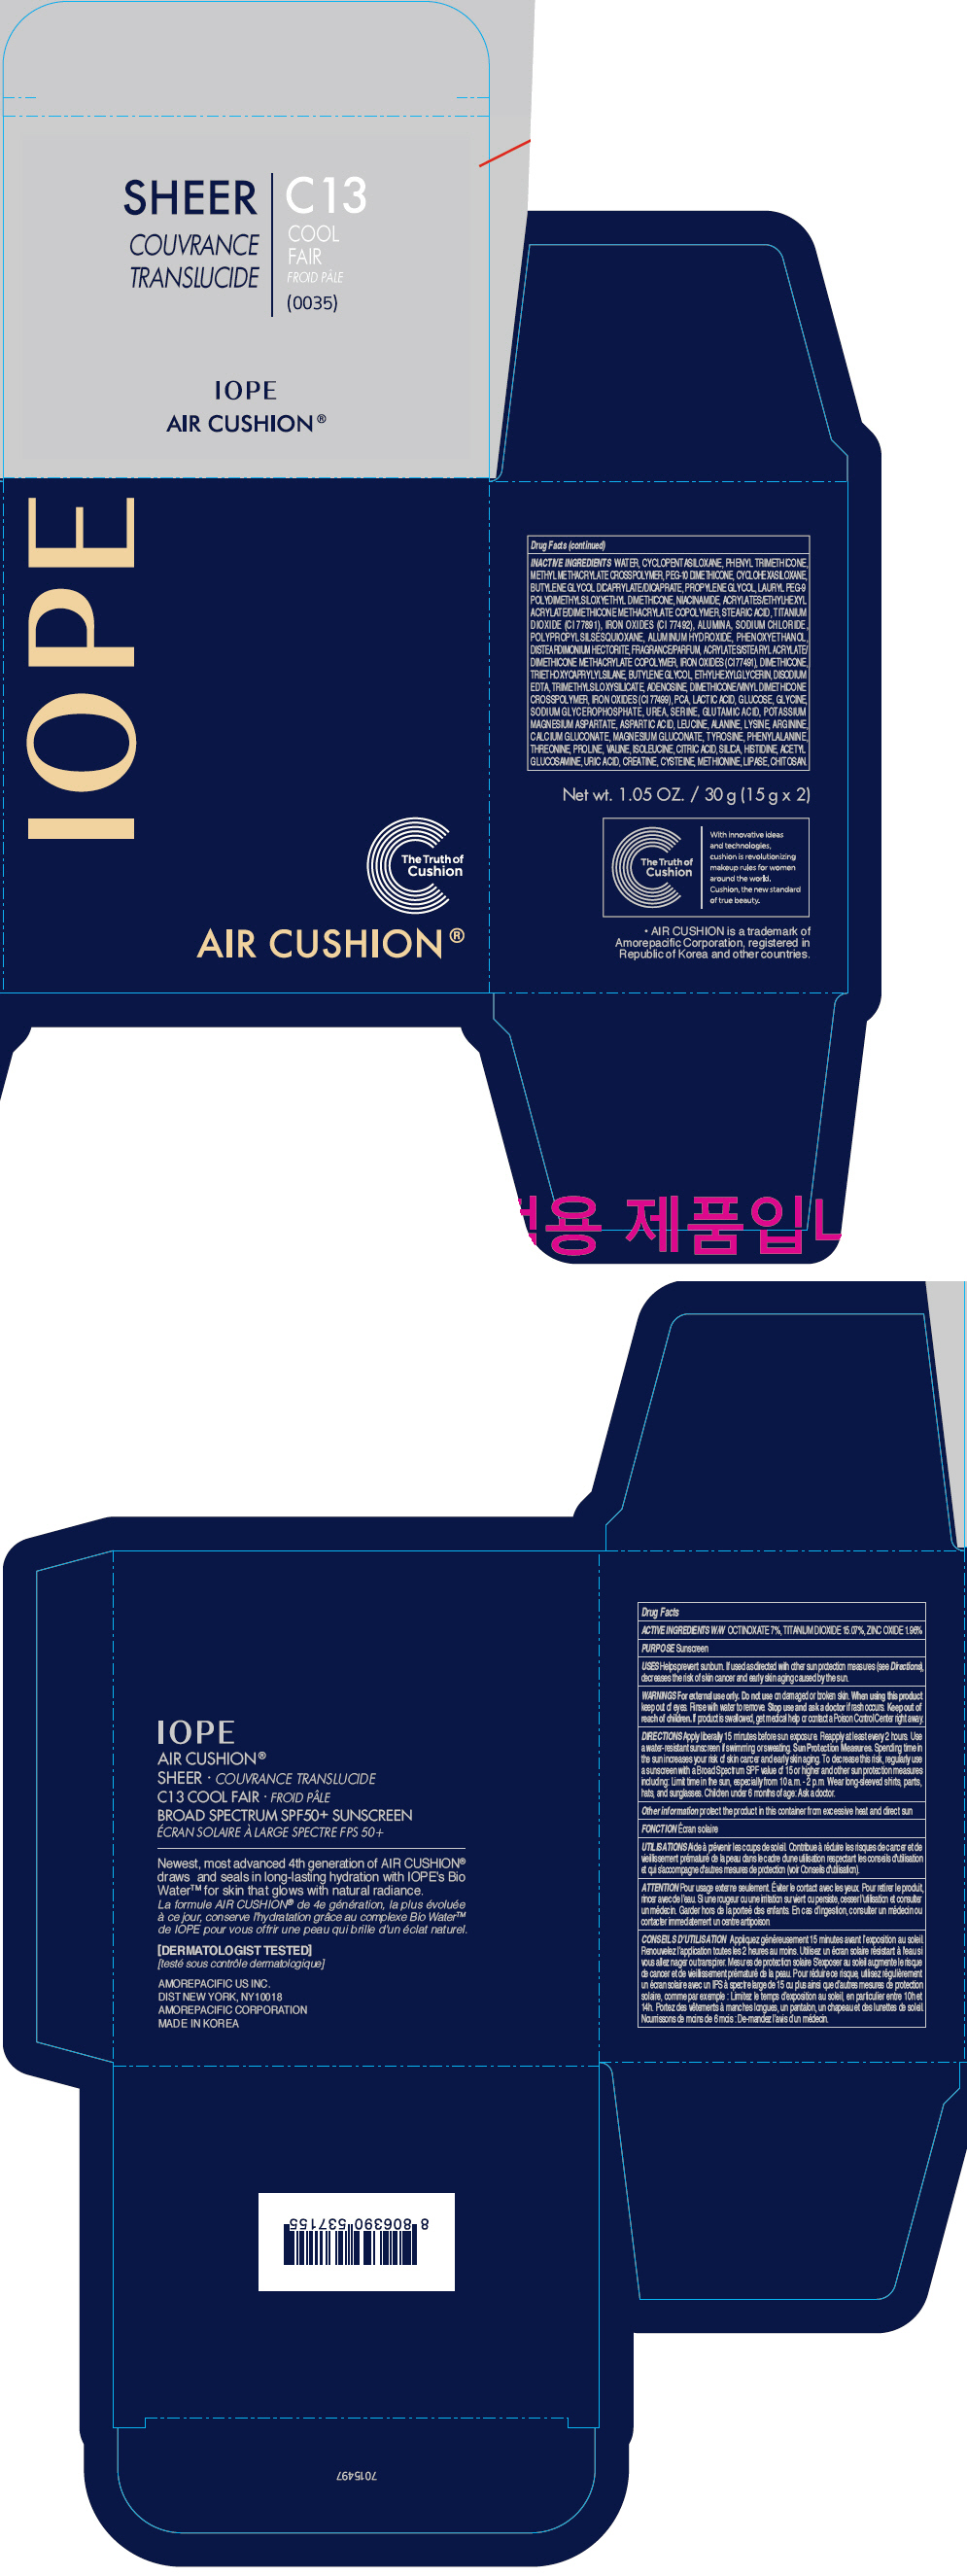 PRINCIPAL DISPLAY PANEL - 30 g Container Carton - C13